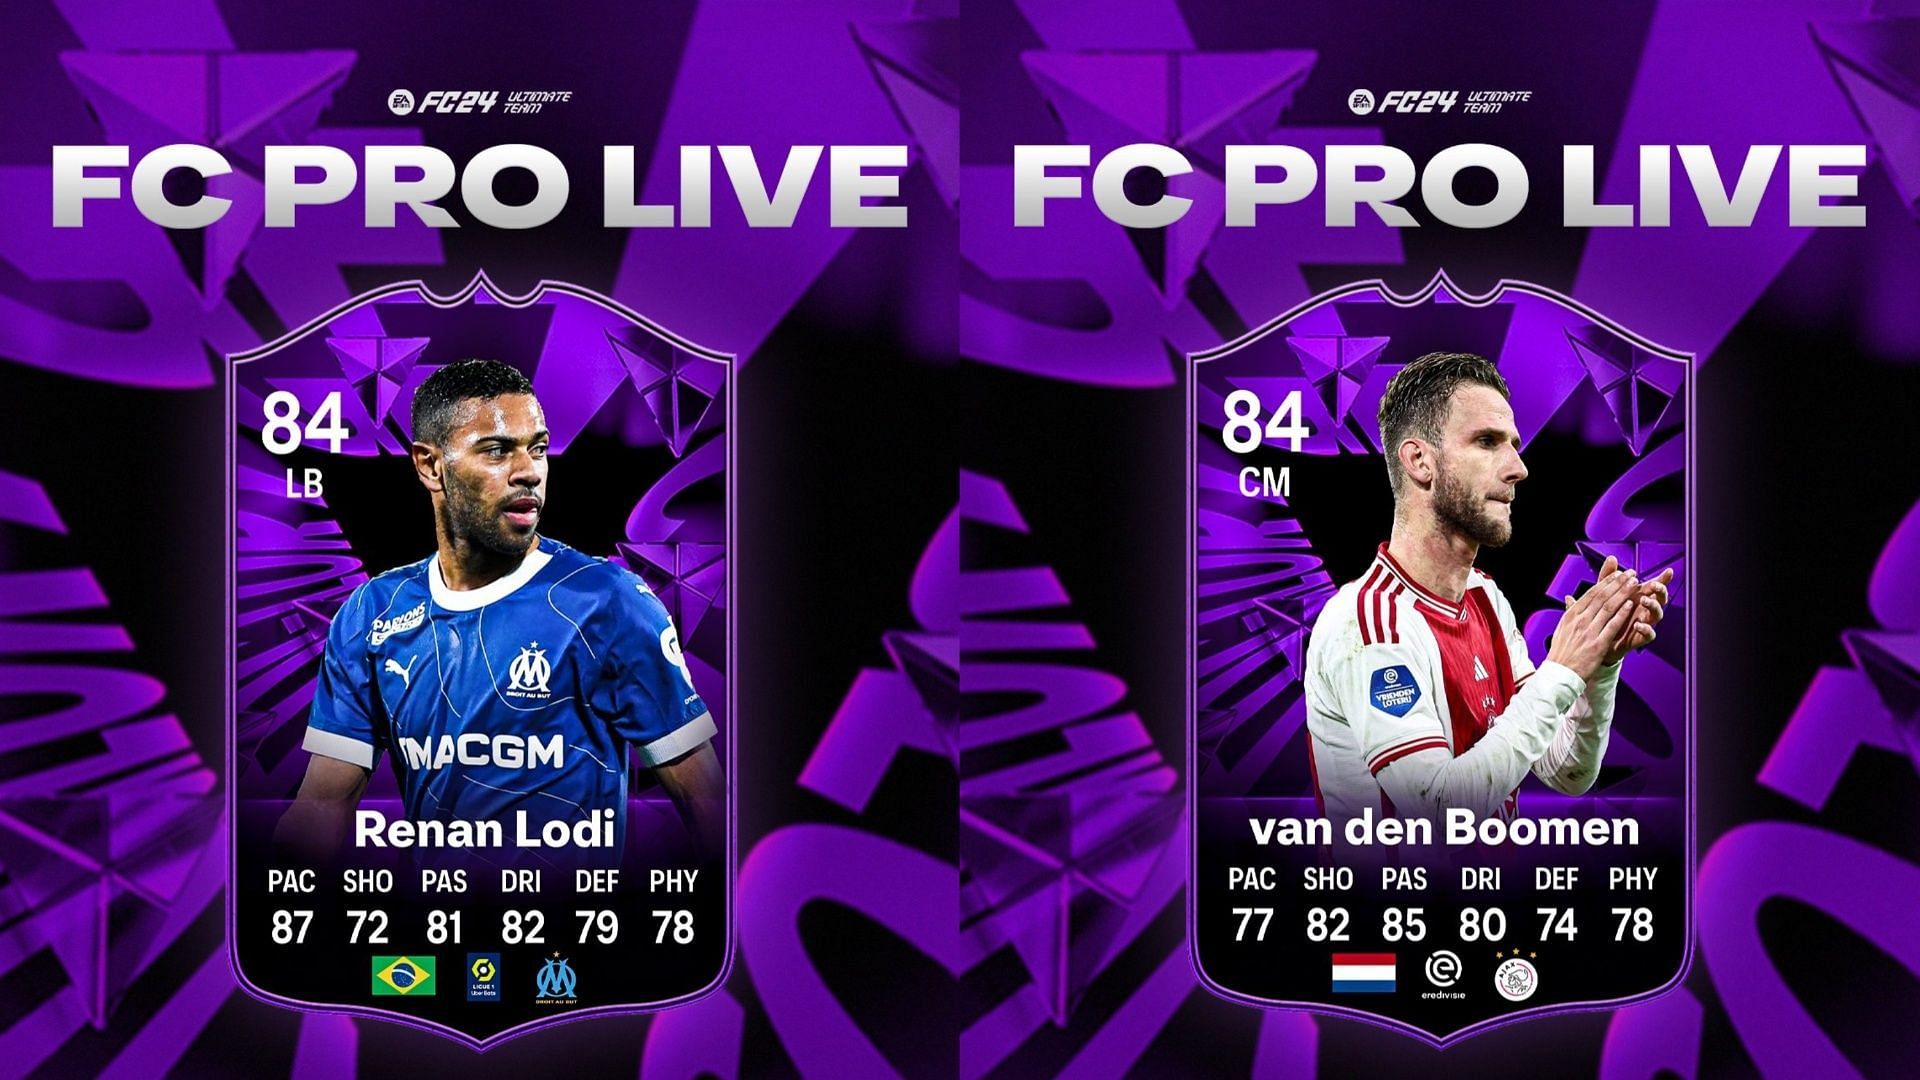 🚨Renan Lodi🇧🇷 and Branco van den Boomen🇳🇱 is coming as FC PRO